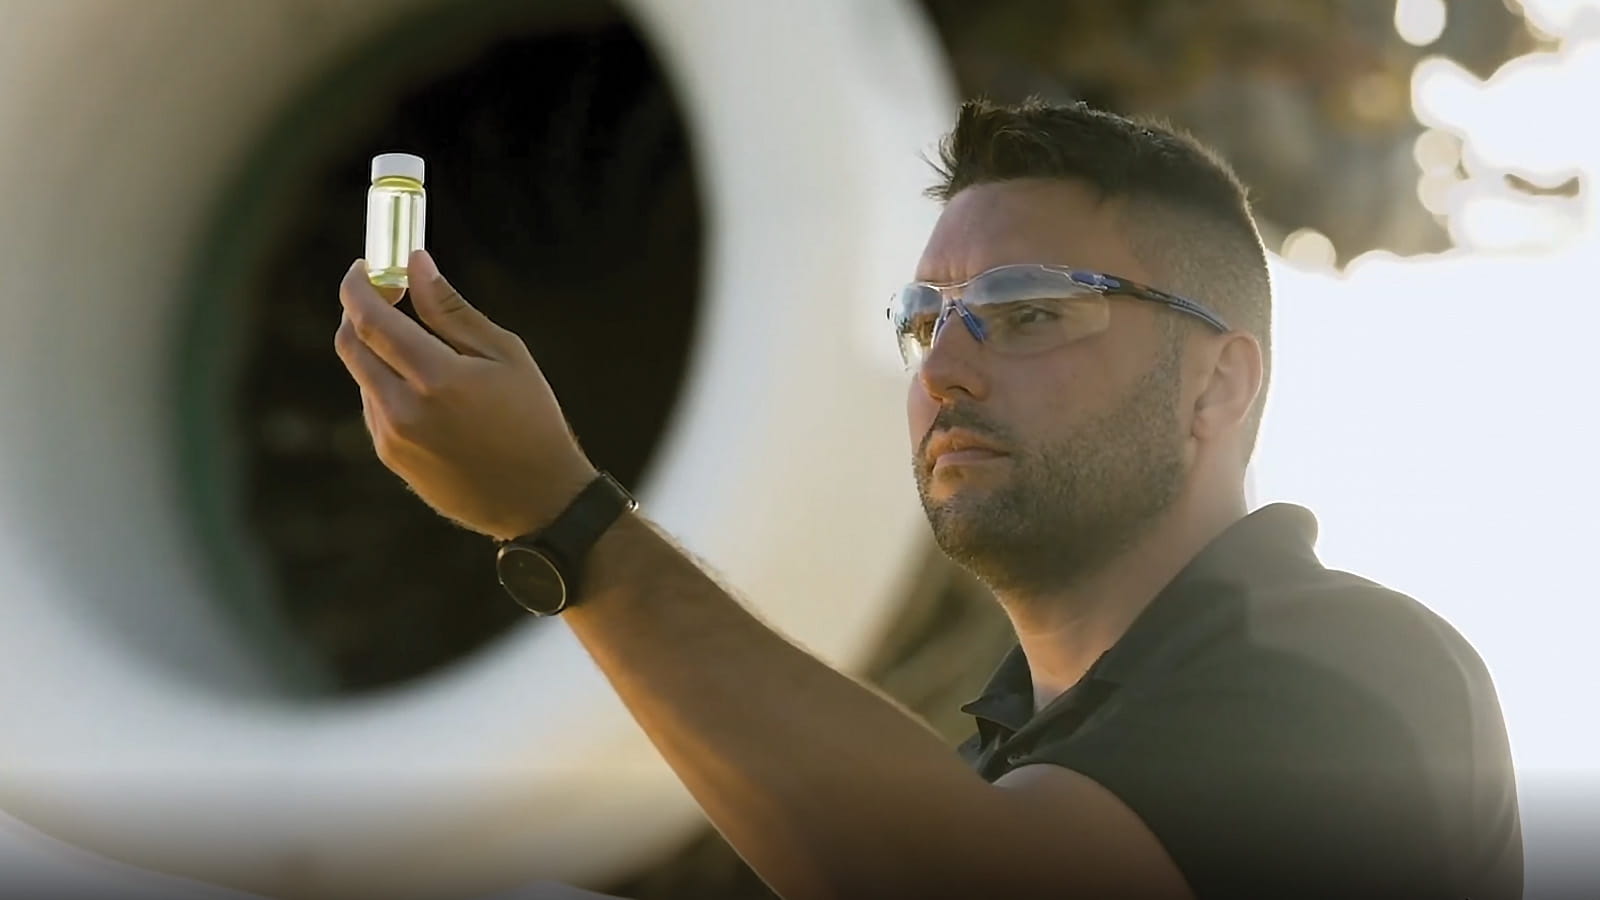 man inspects alternate aviation fuel source